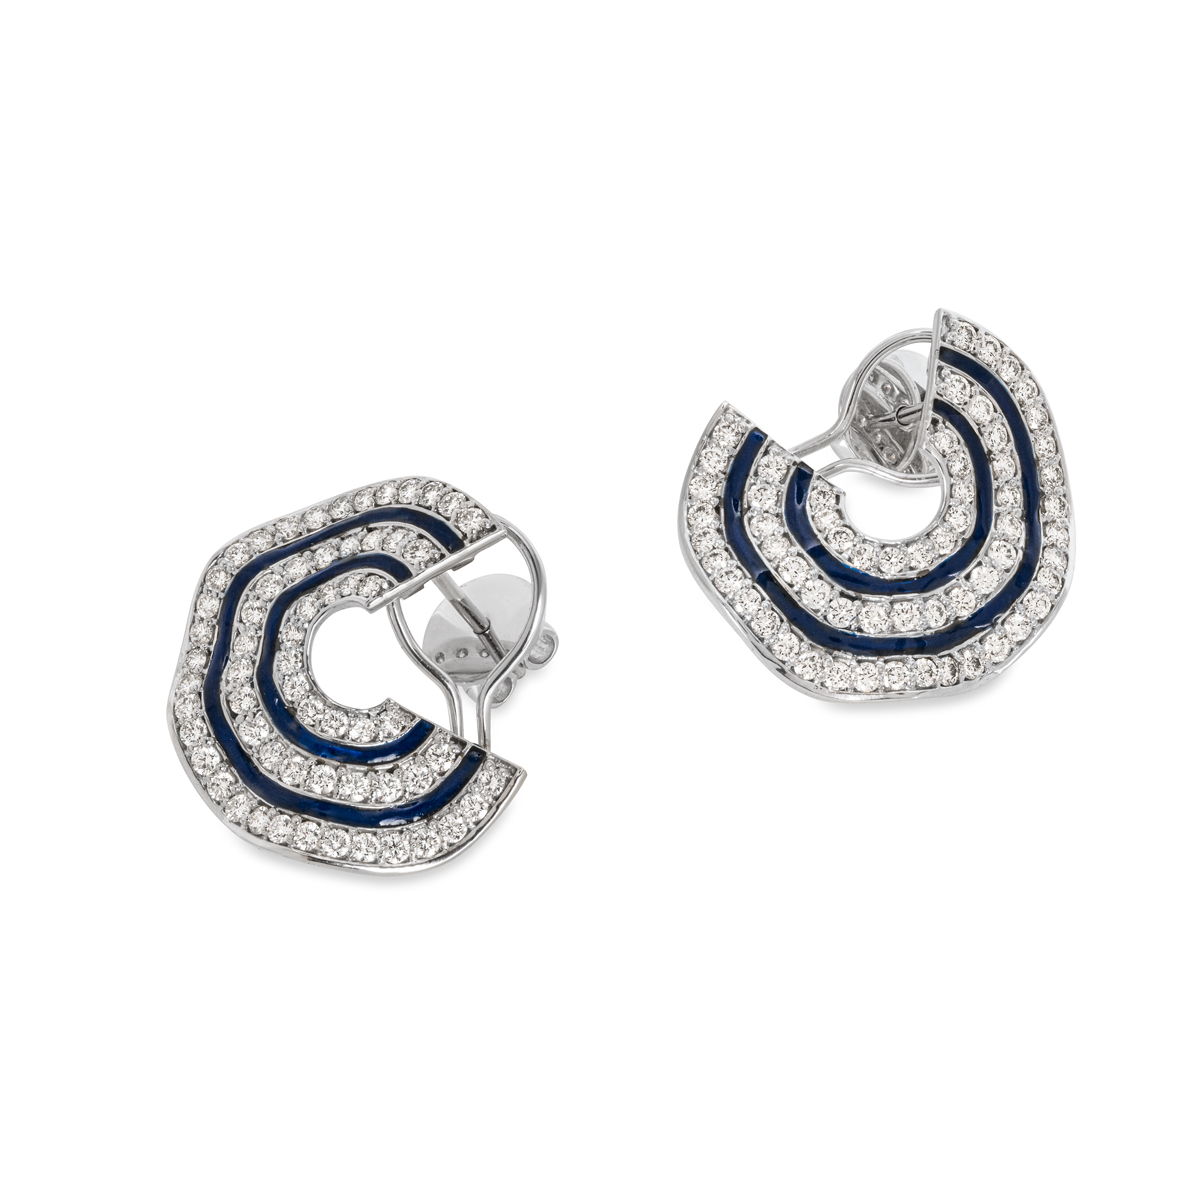 White Gold Diamond & Enamel Earrings 3.29ct